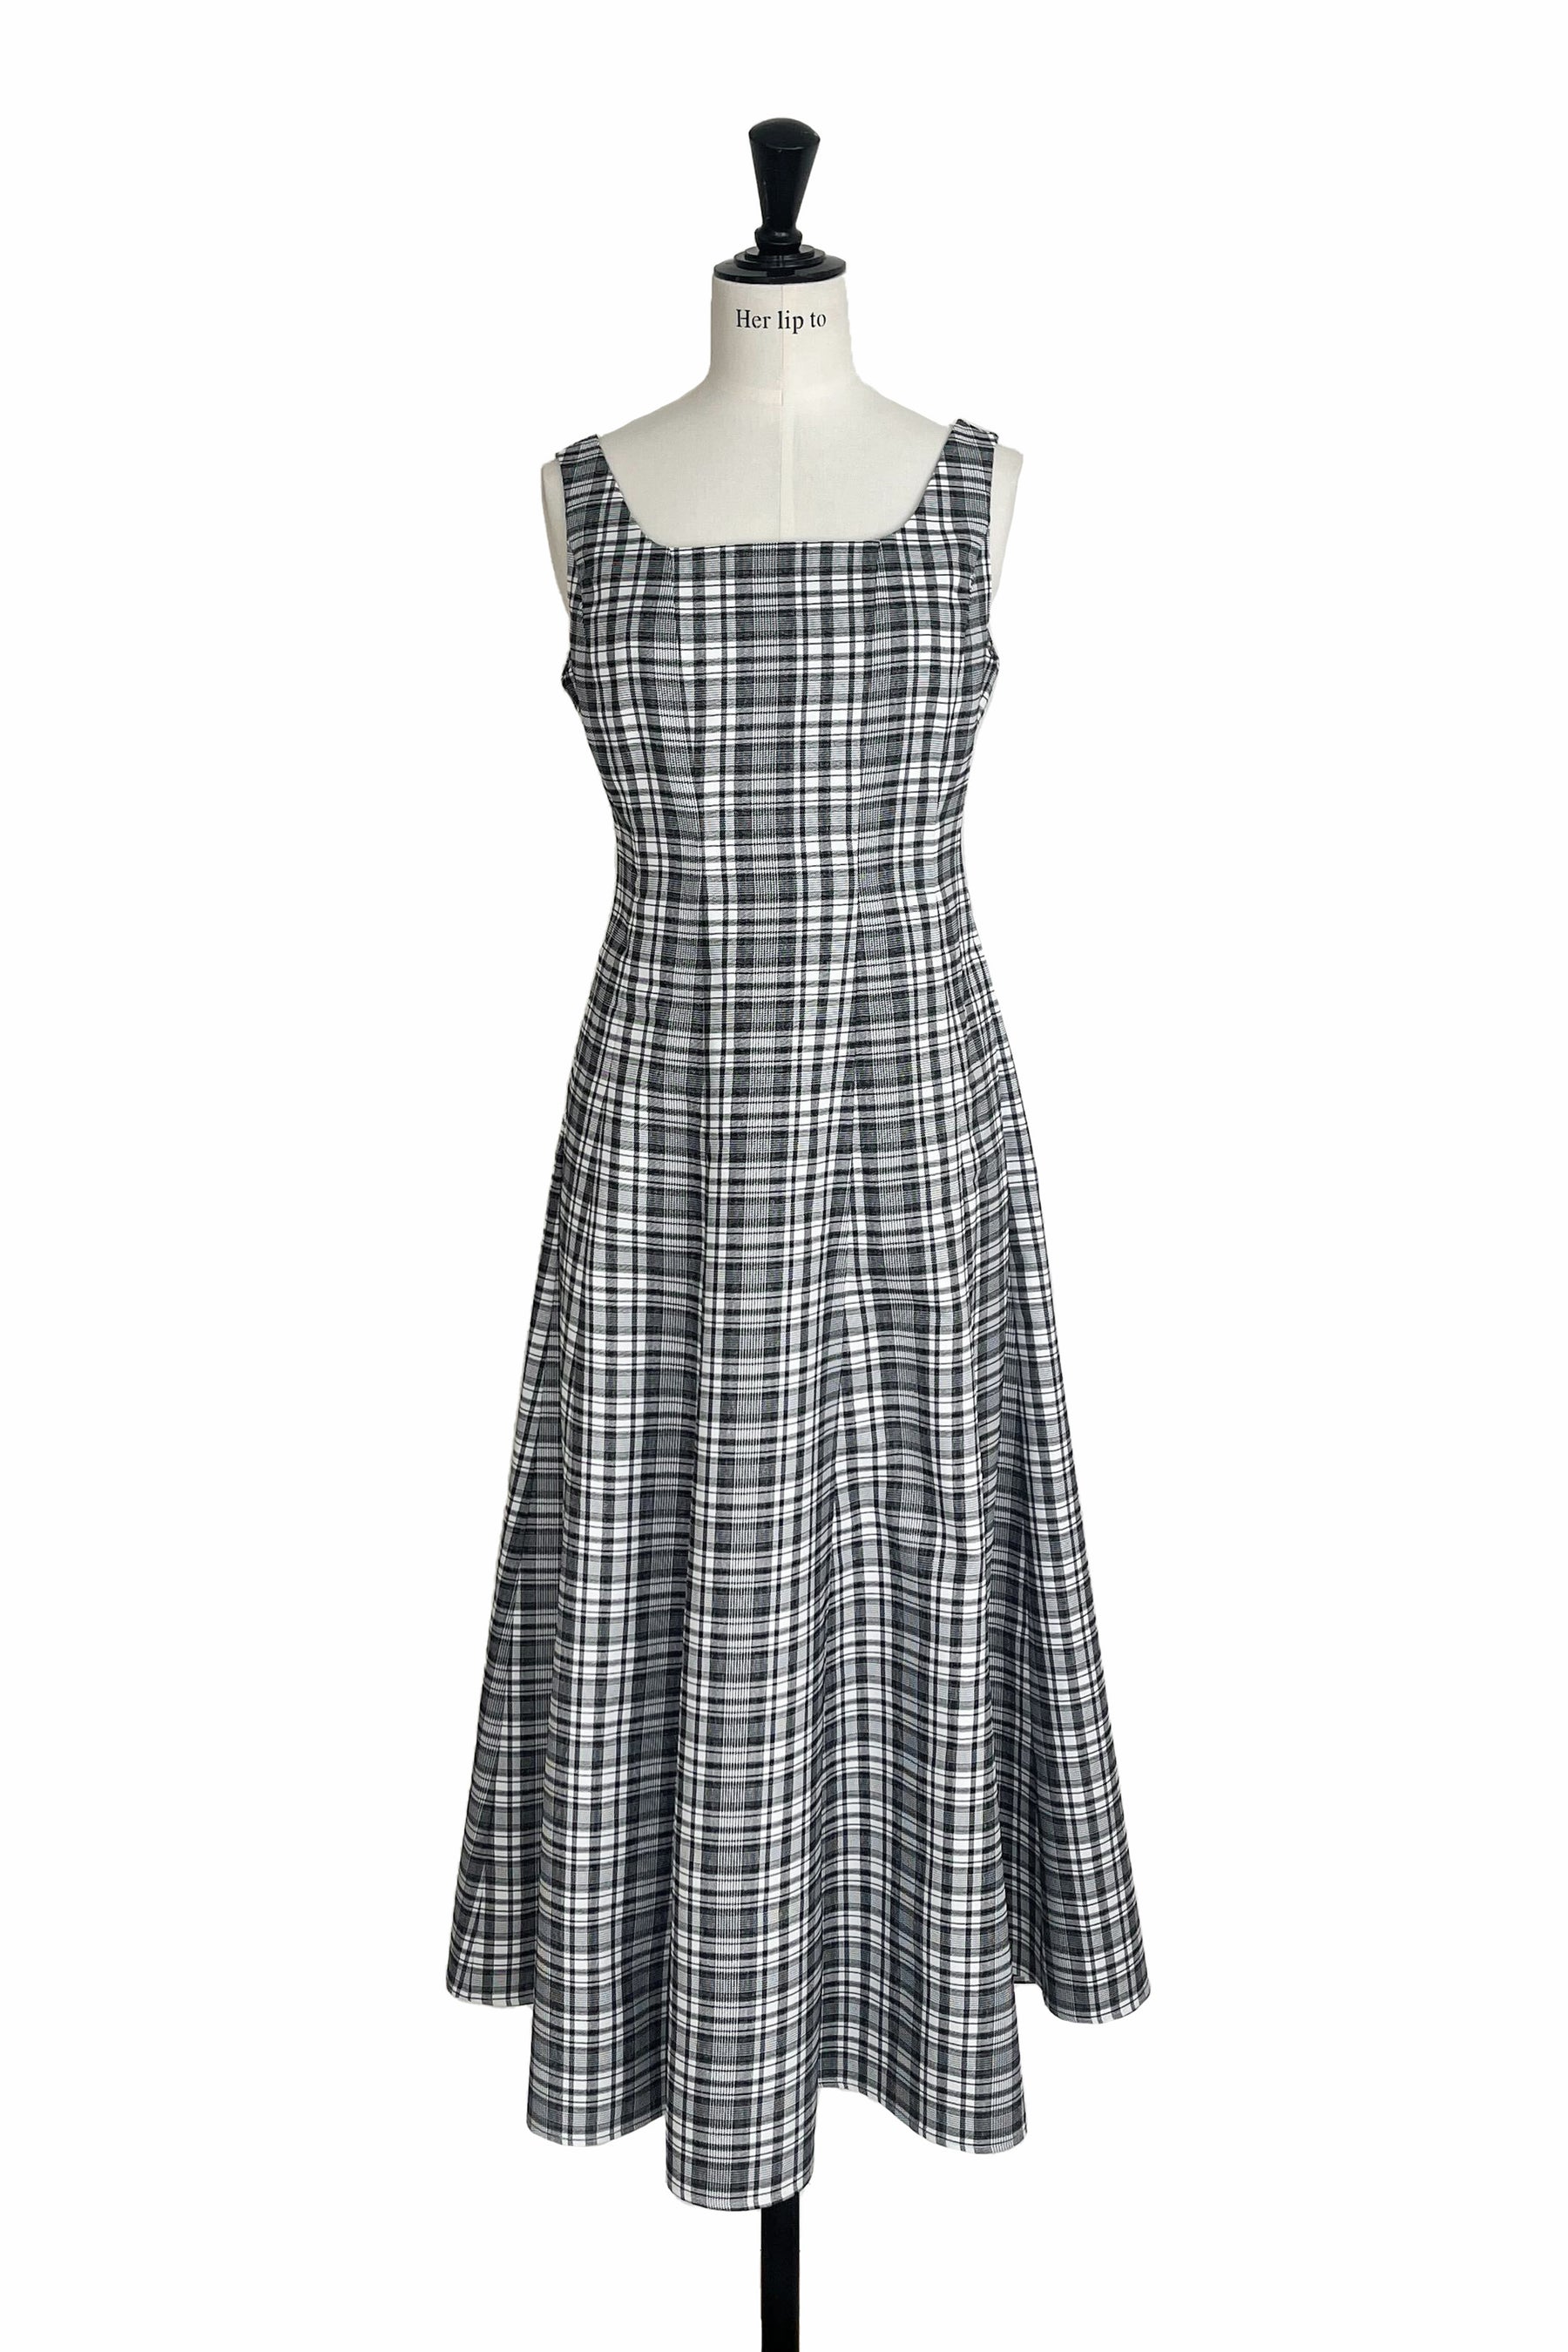 [New color] Paddington Long Dress